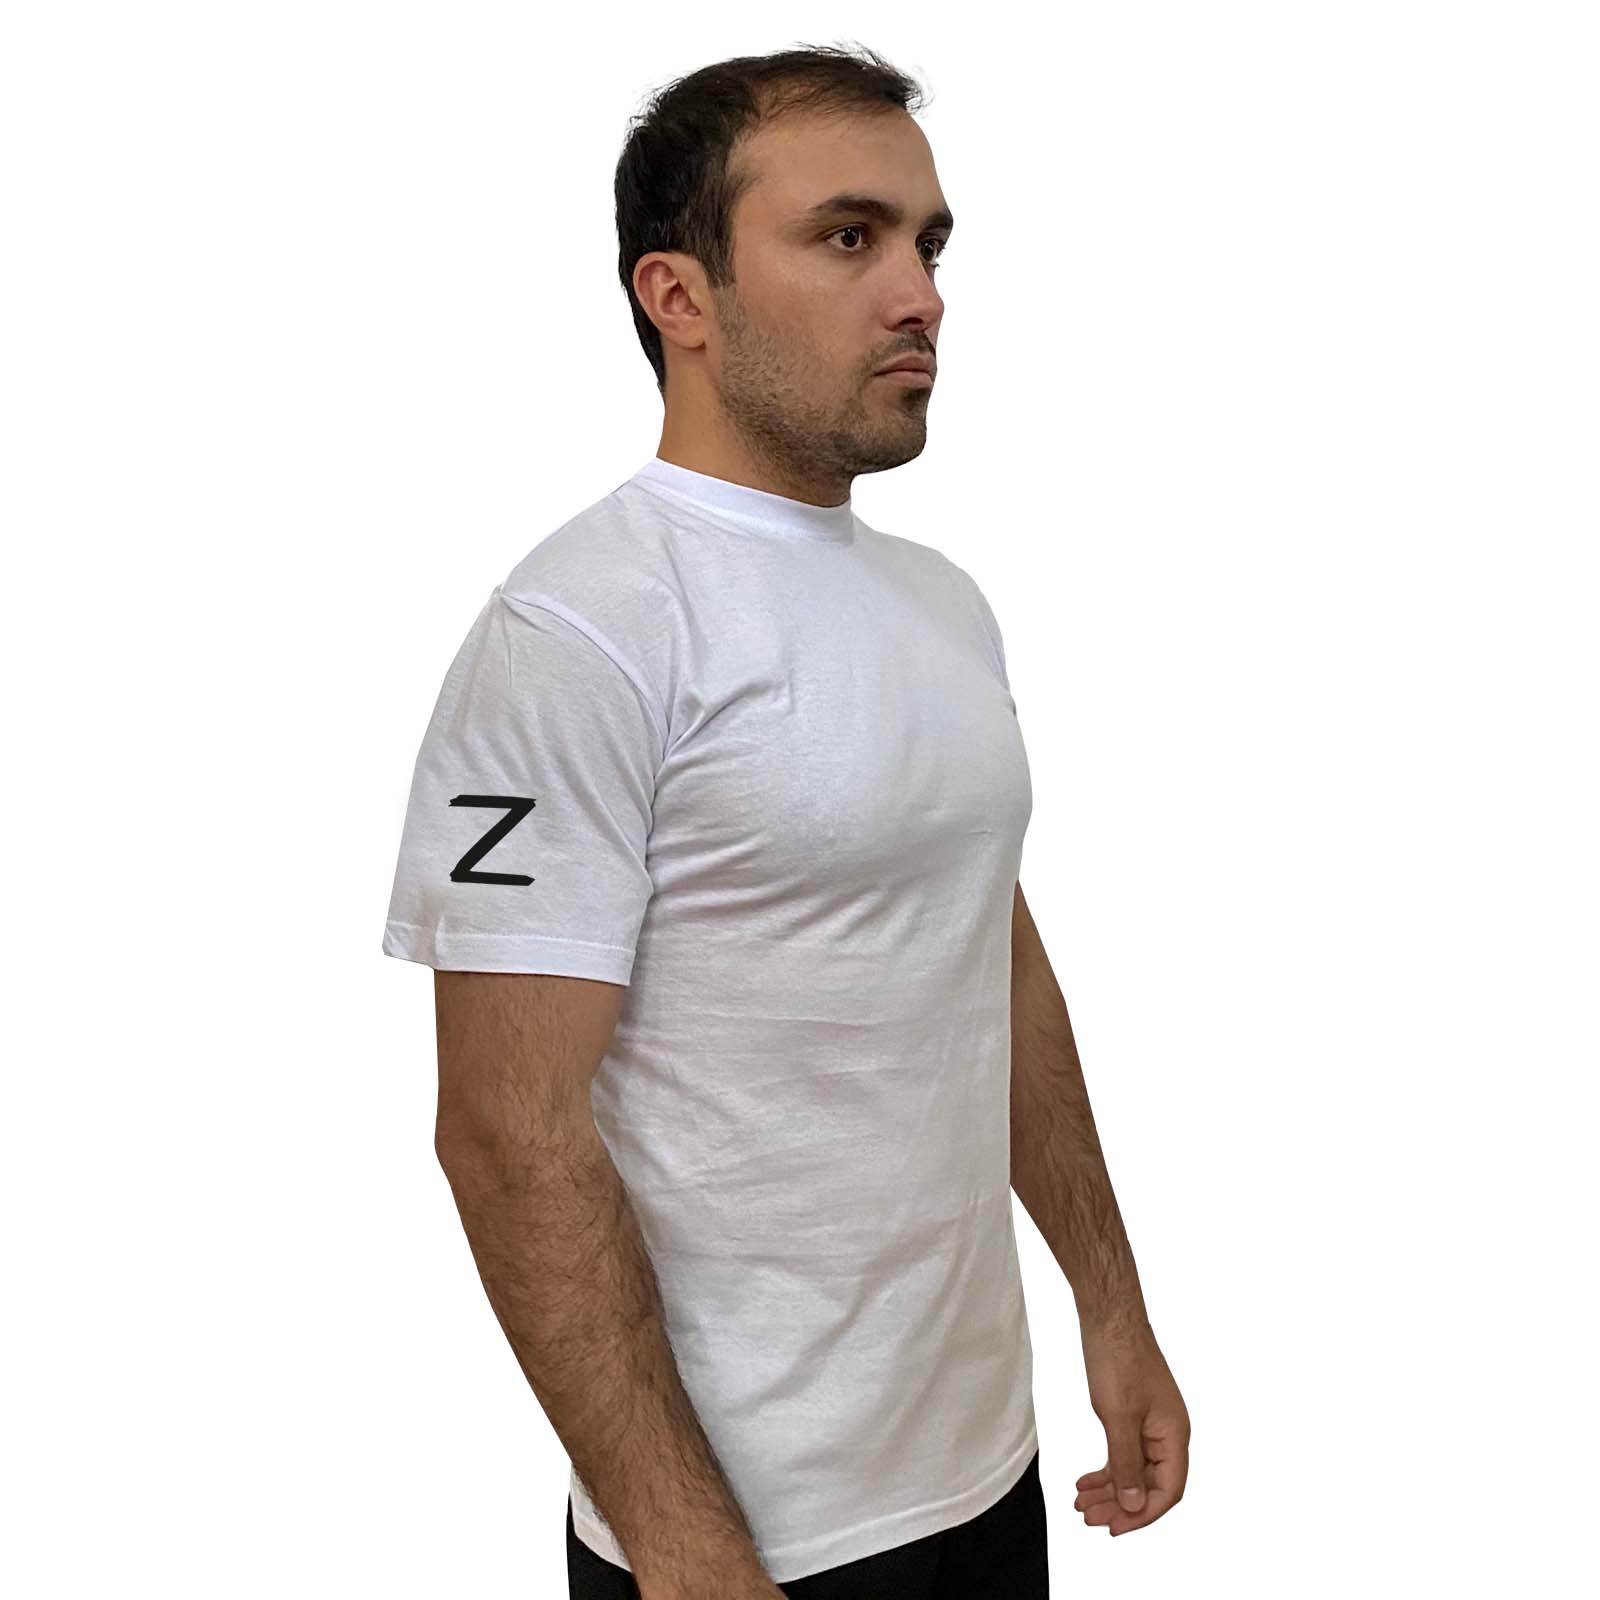 Белая футболка с надписью Z на рукаве